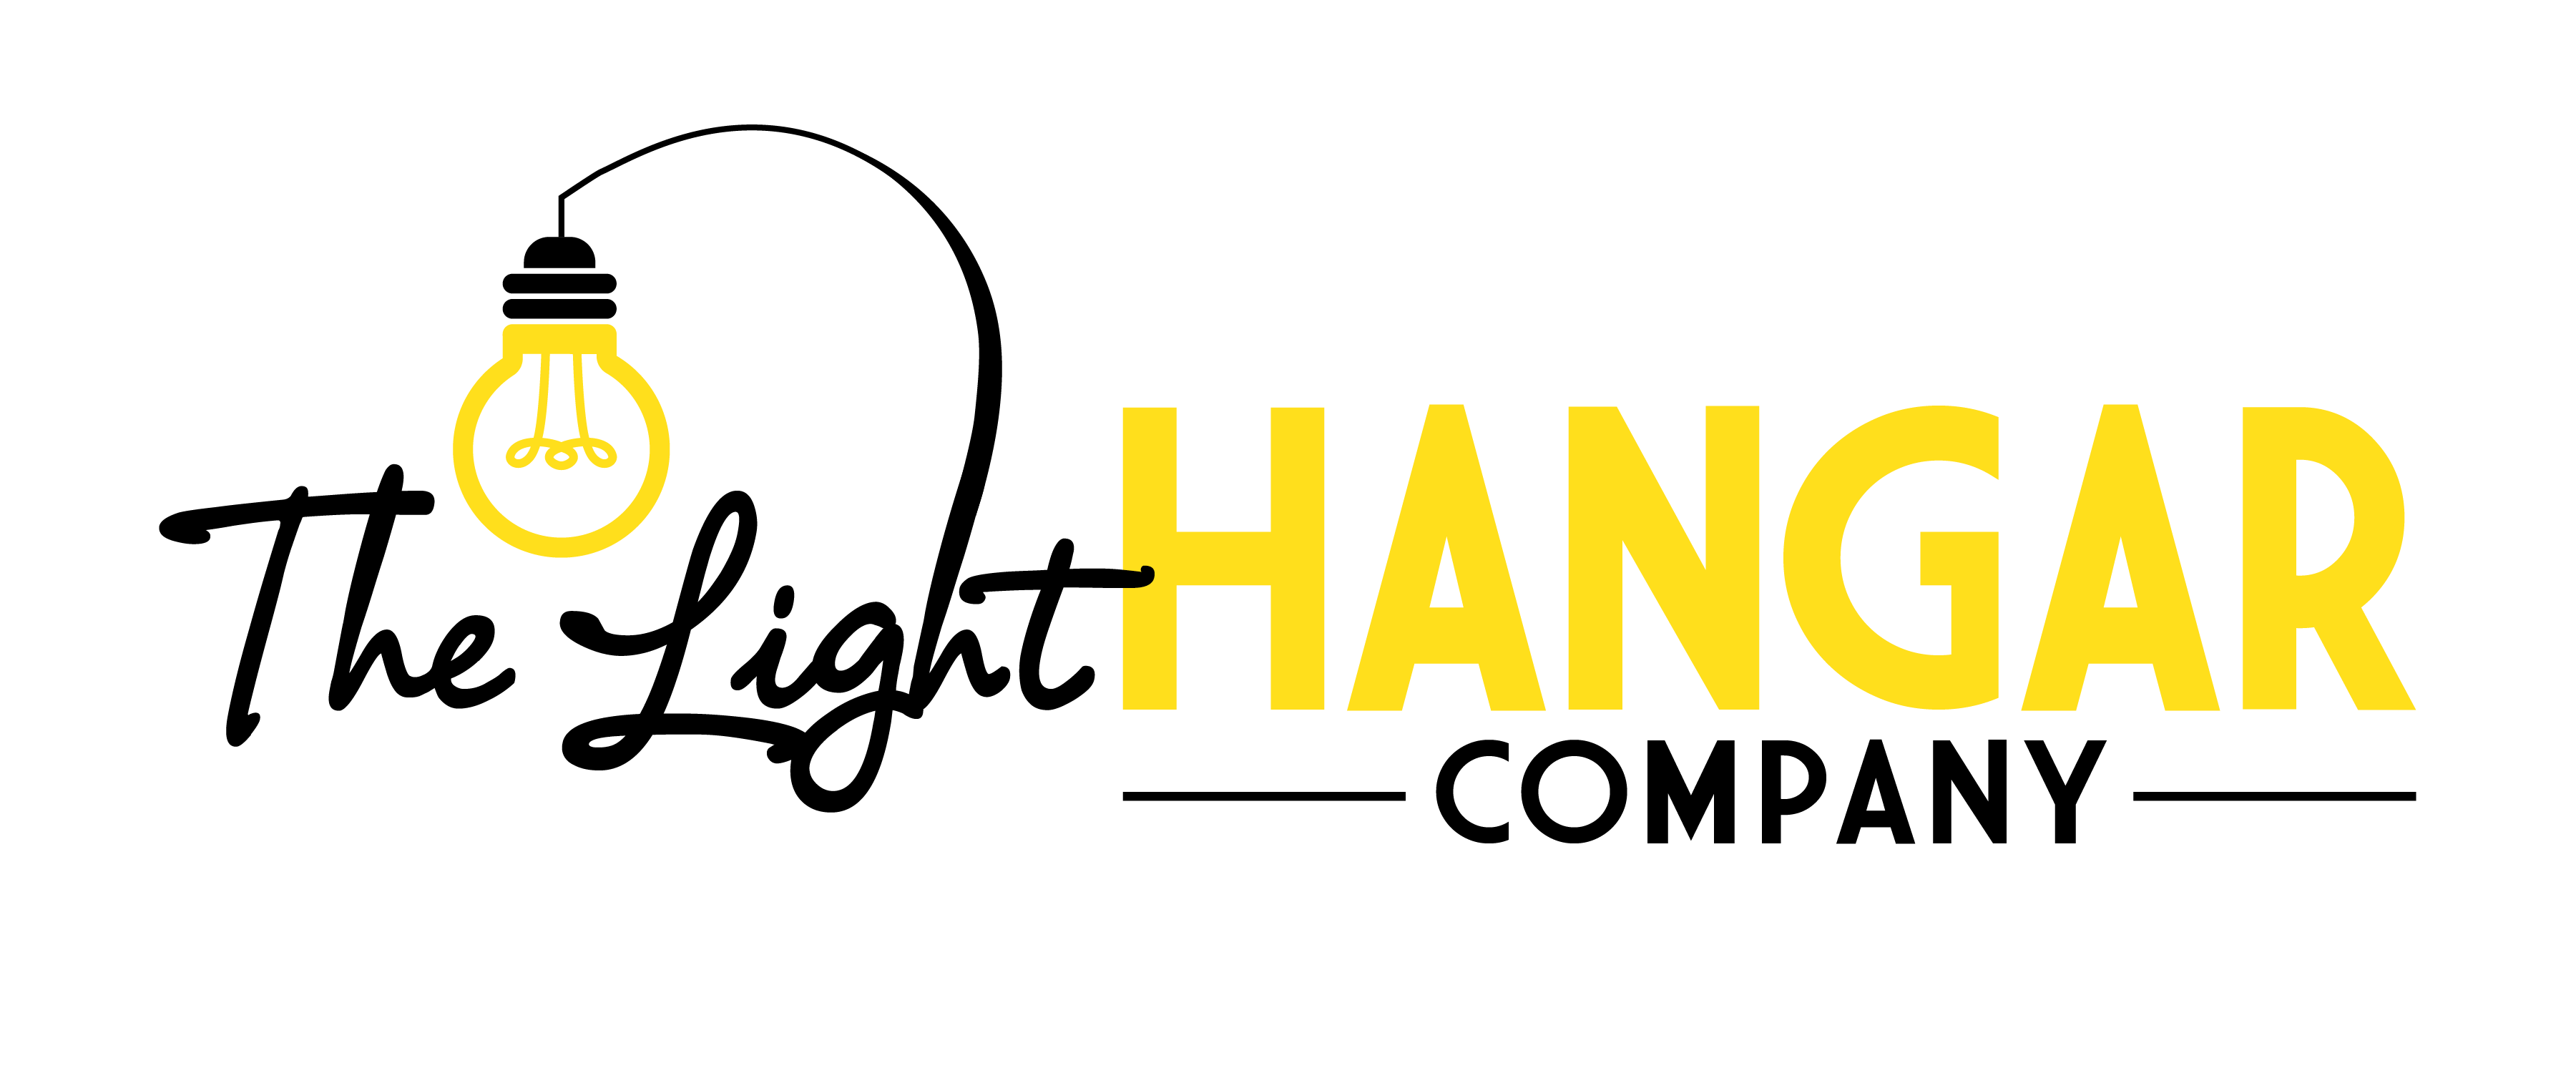 Light Company Logo - The Light Hangar Company, LLC Home Page